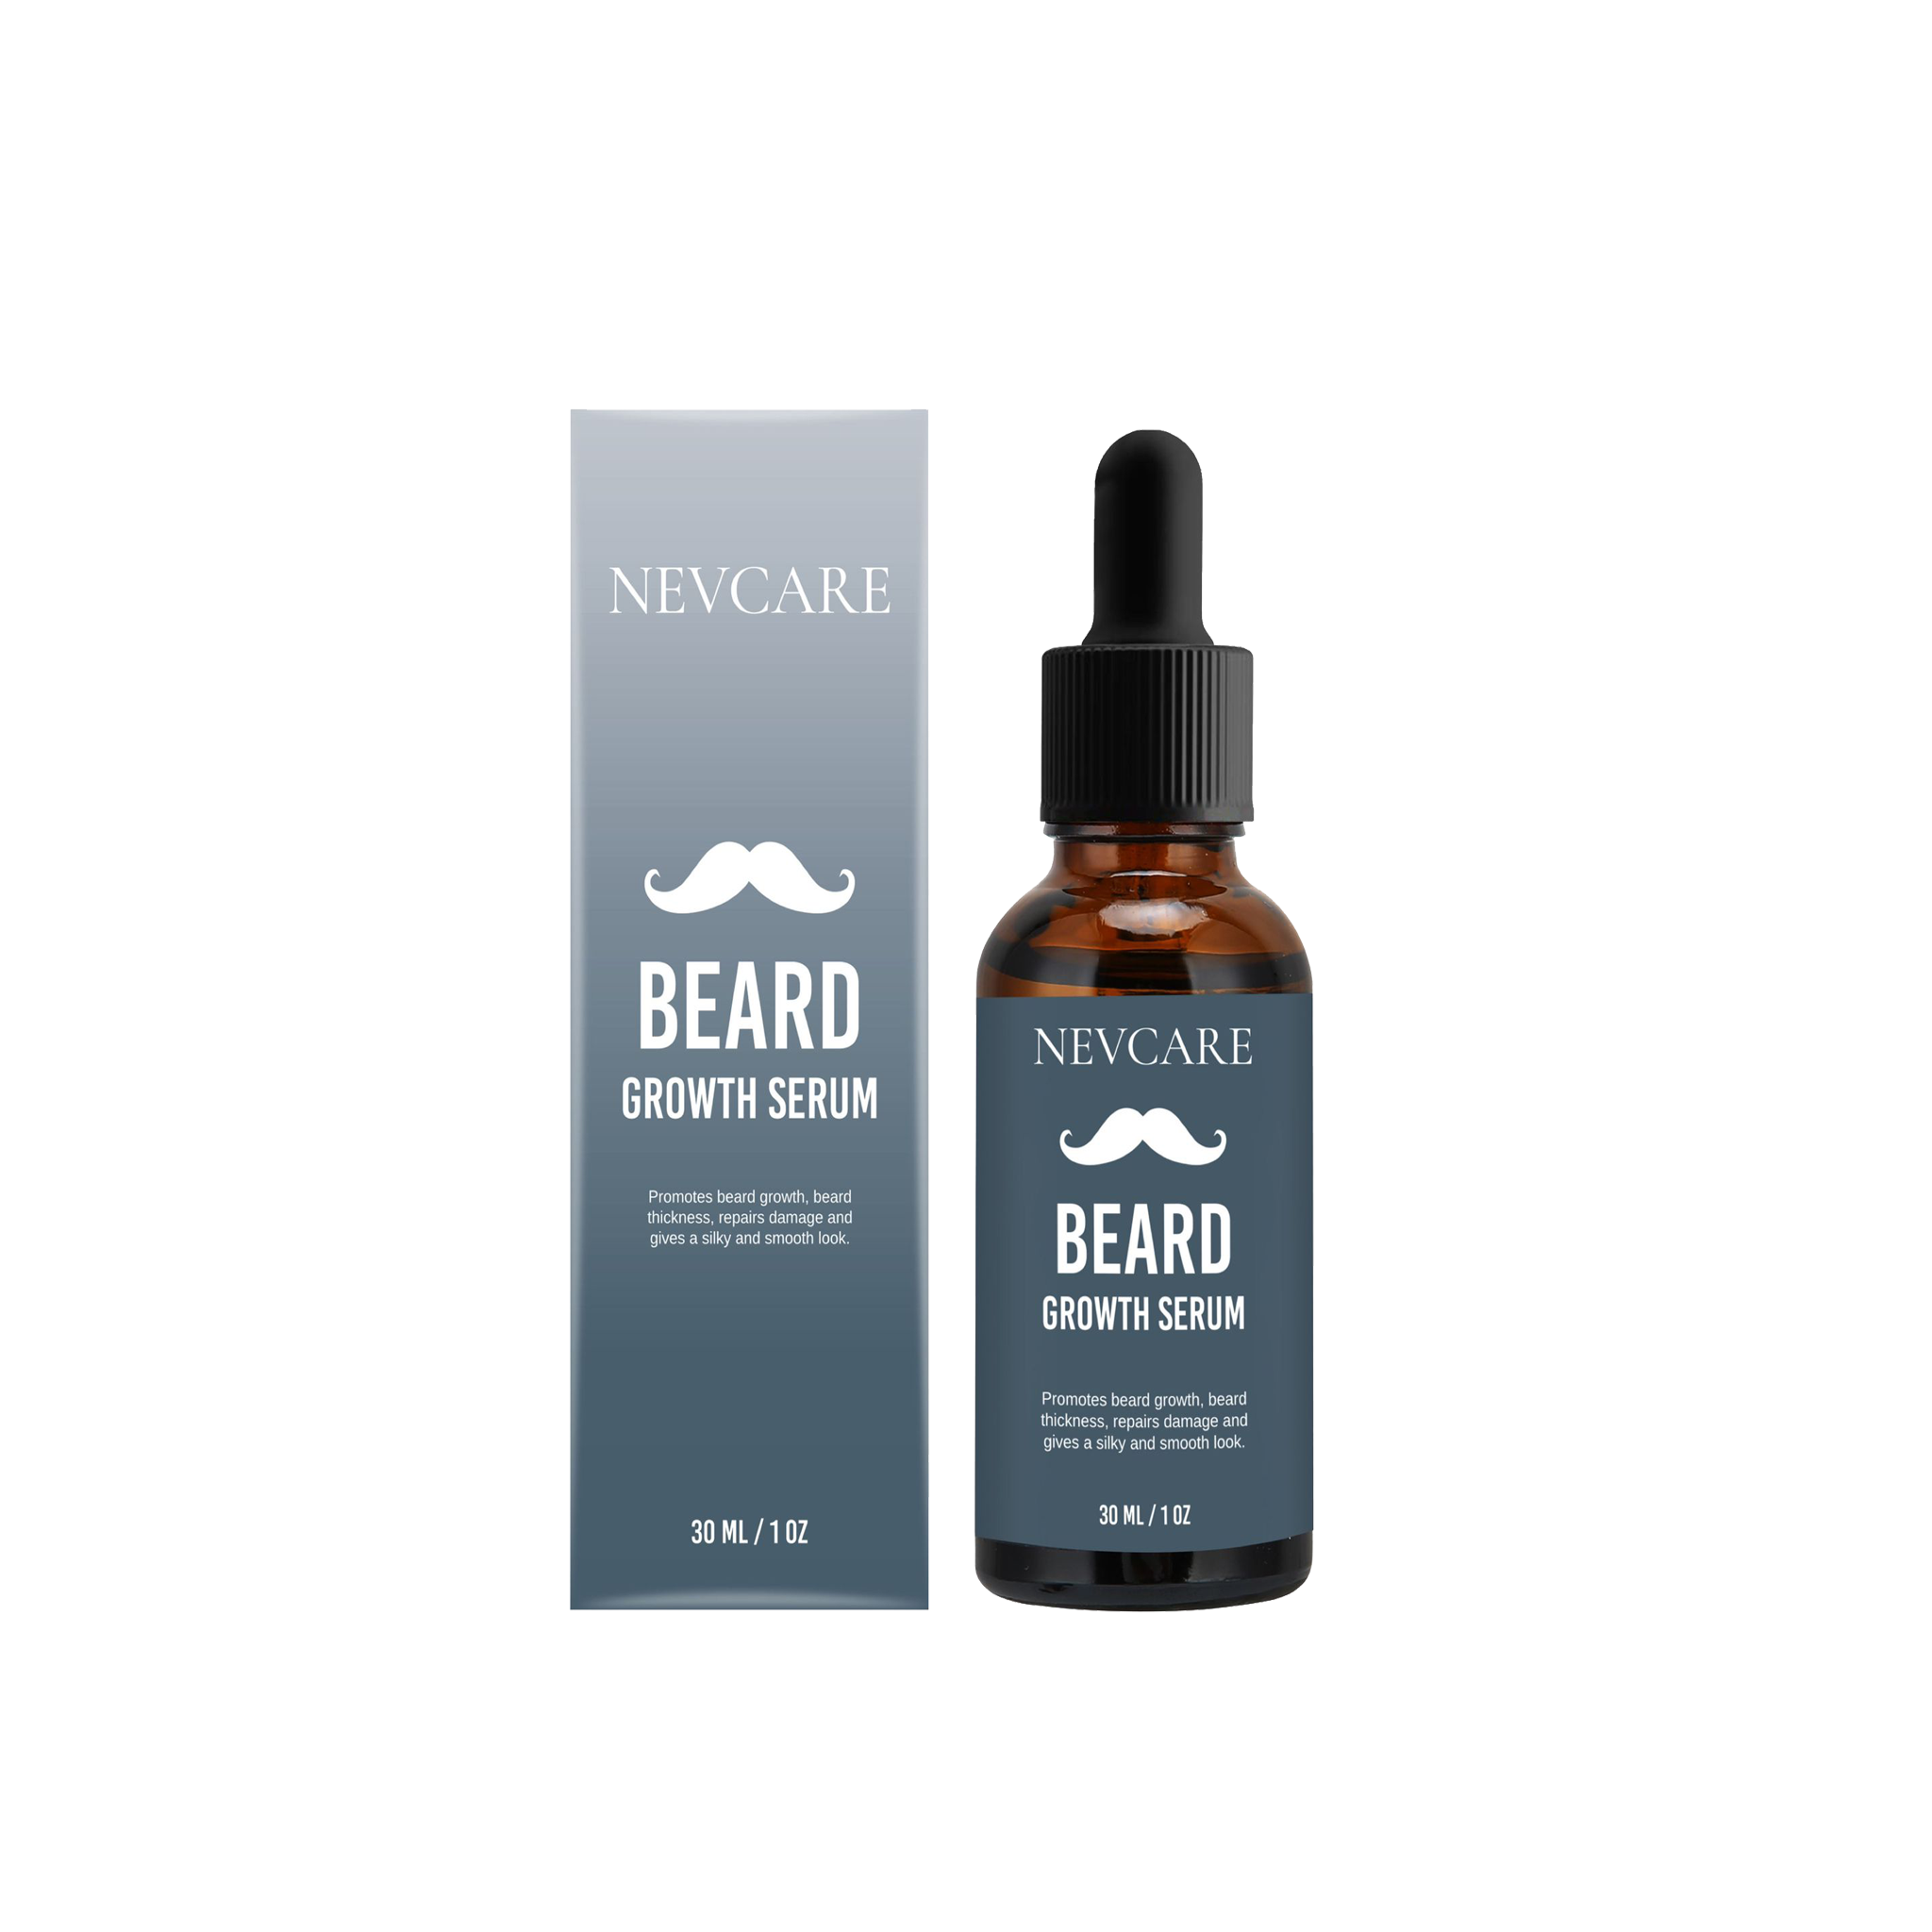 Beard growth serum